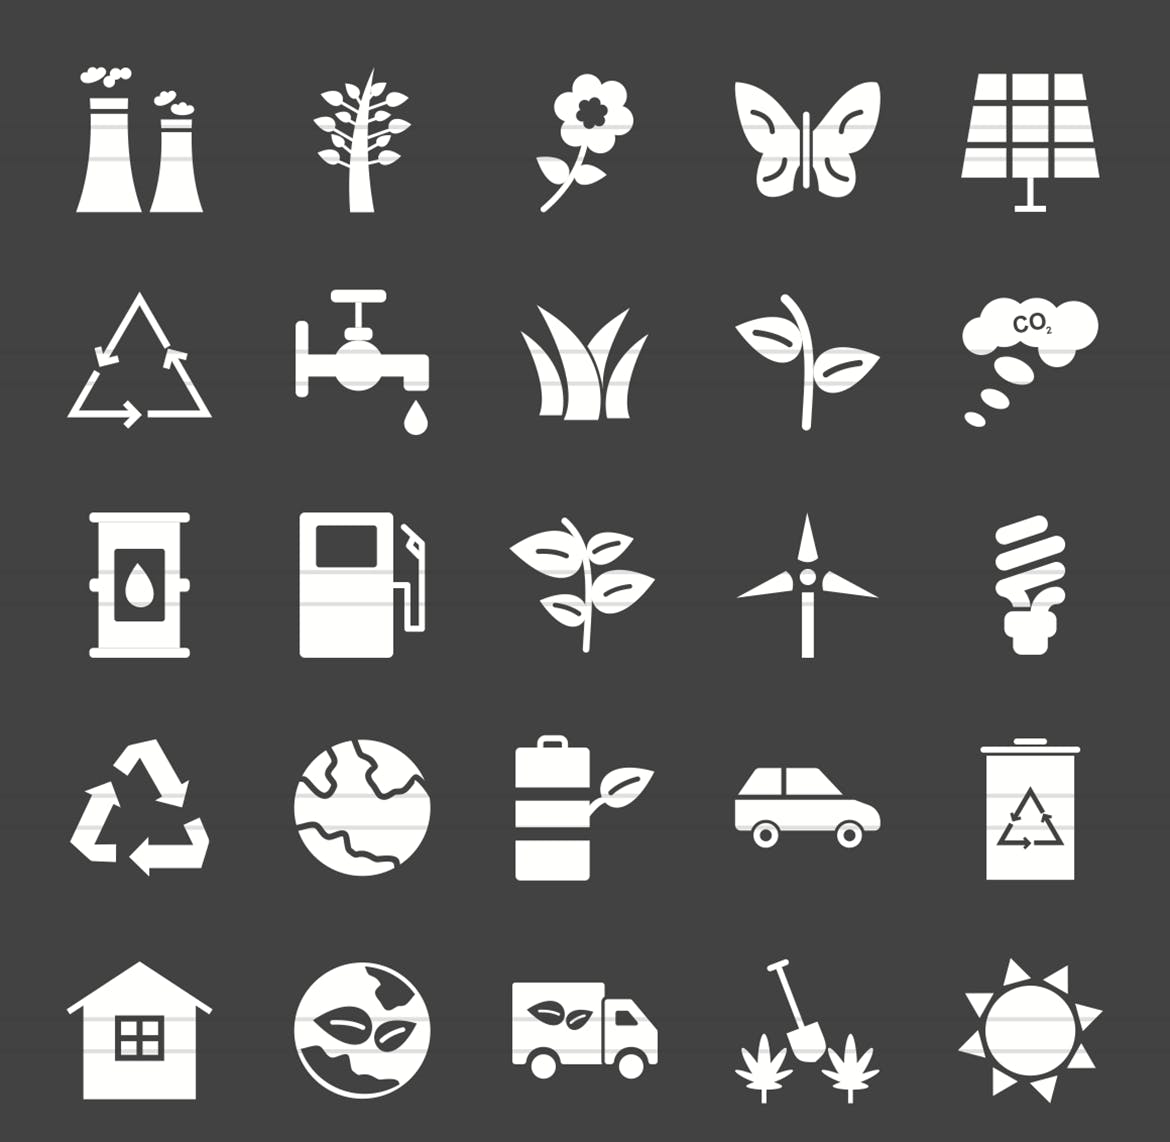 50枚生态环境主题图标素材 50 Ecology Glyph Inverted Icons插图(1)